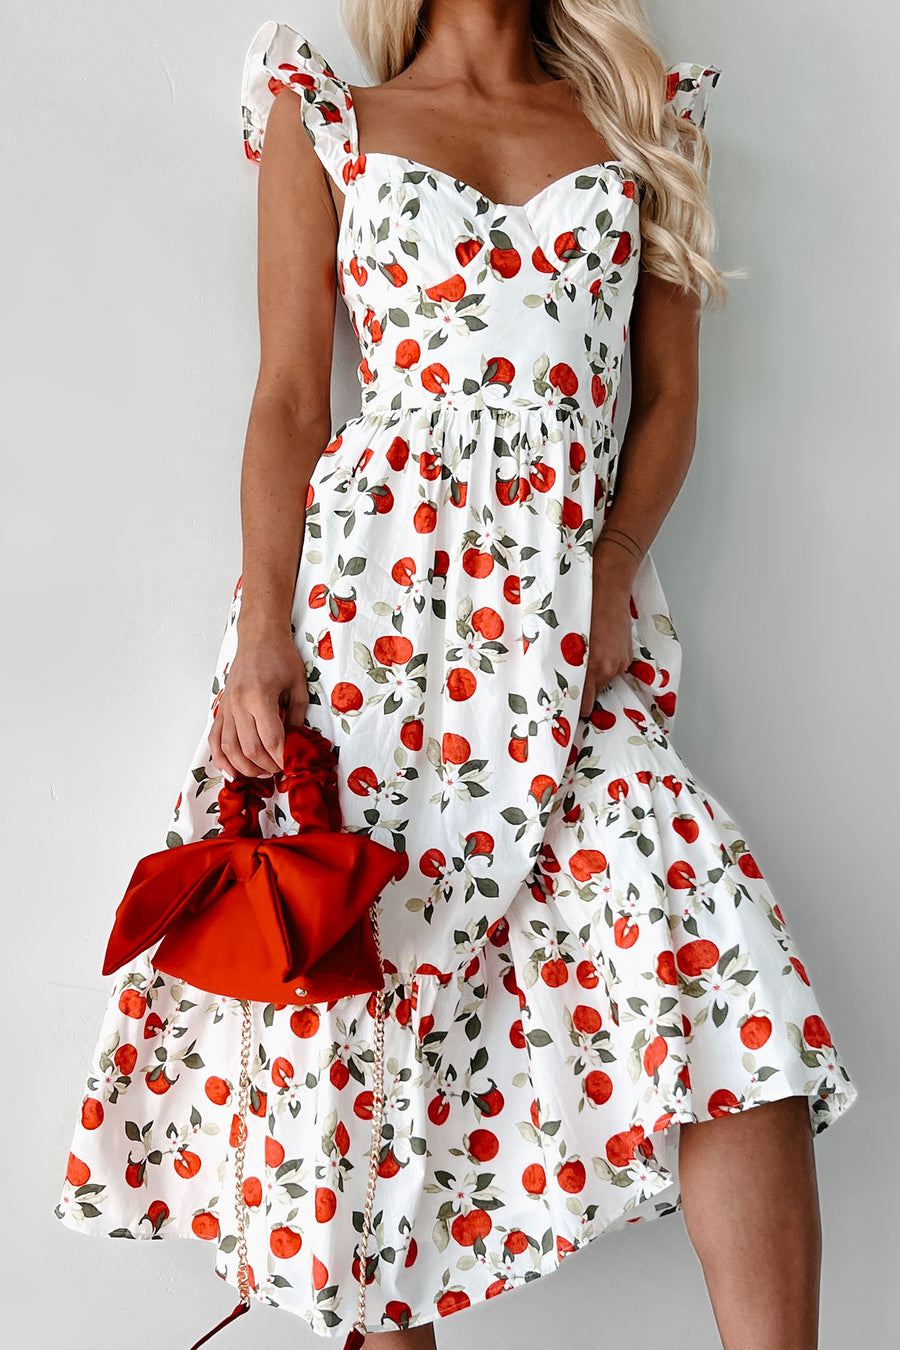 Orchard Views Apple Blossom Printed Midi Dress (Red/White) - NanaMacs